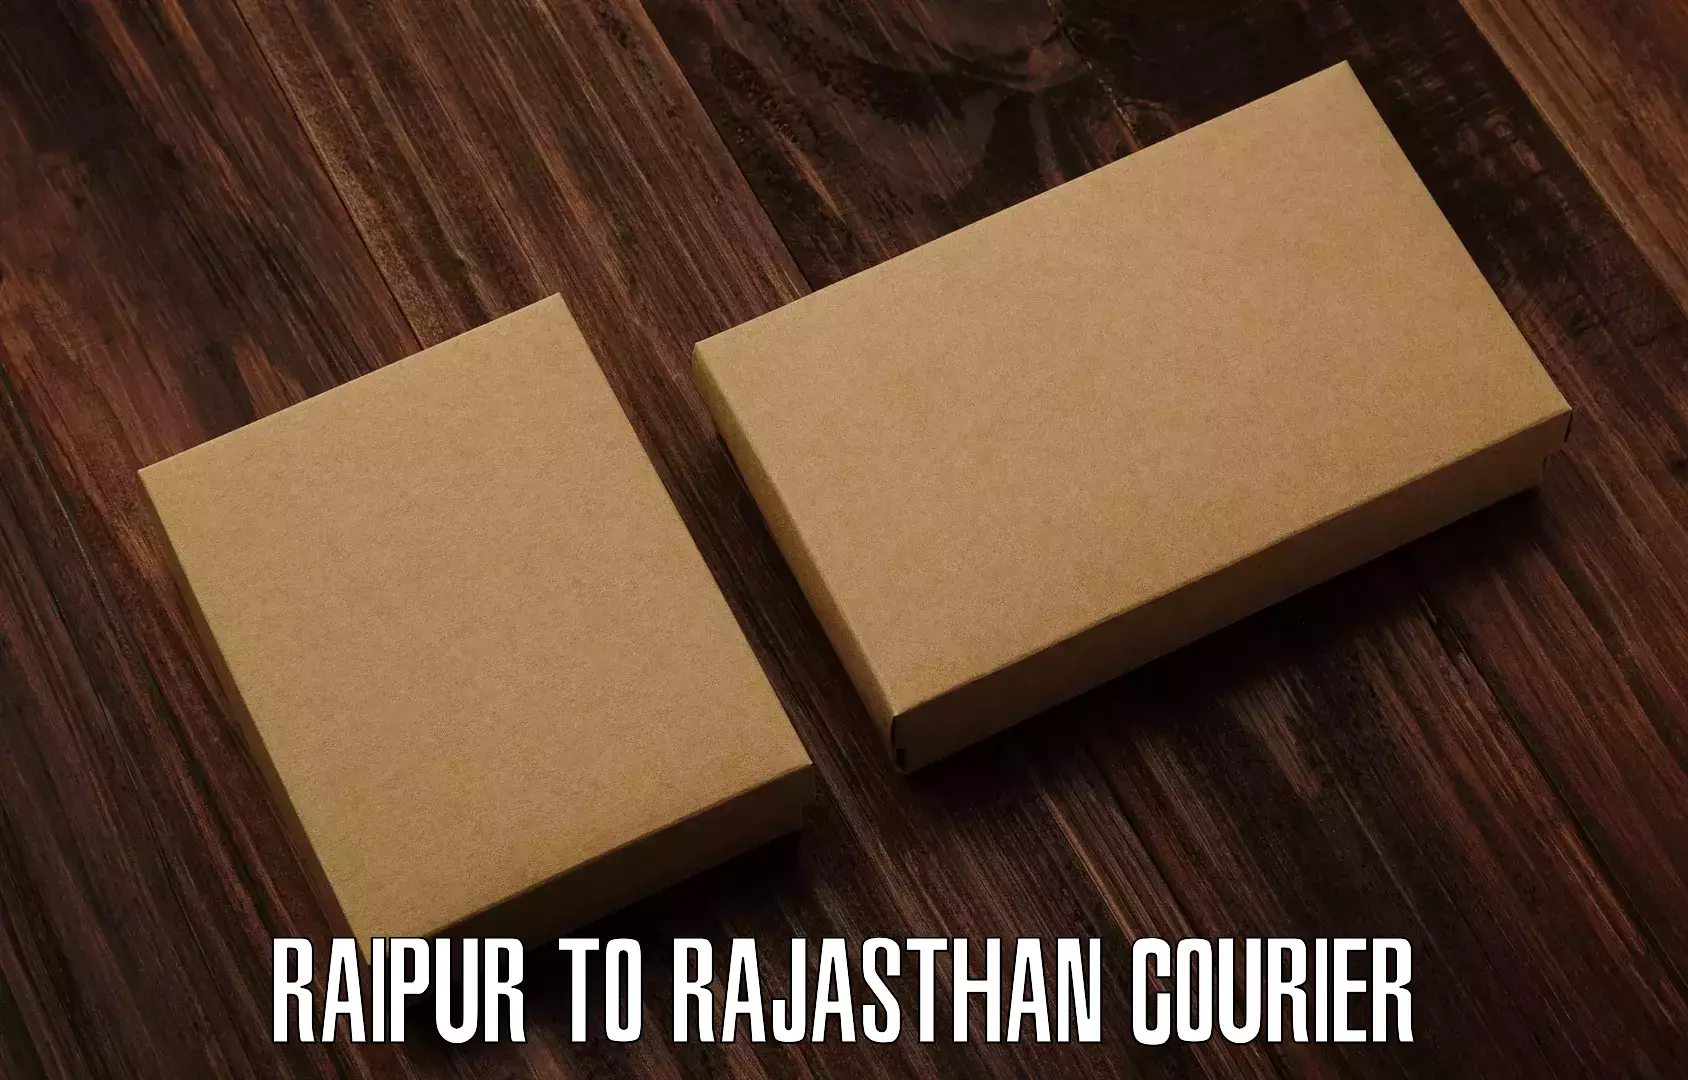 Efficient cargo handling Raipur to Nainwa